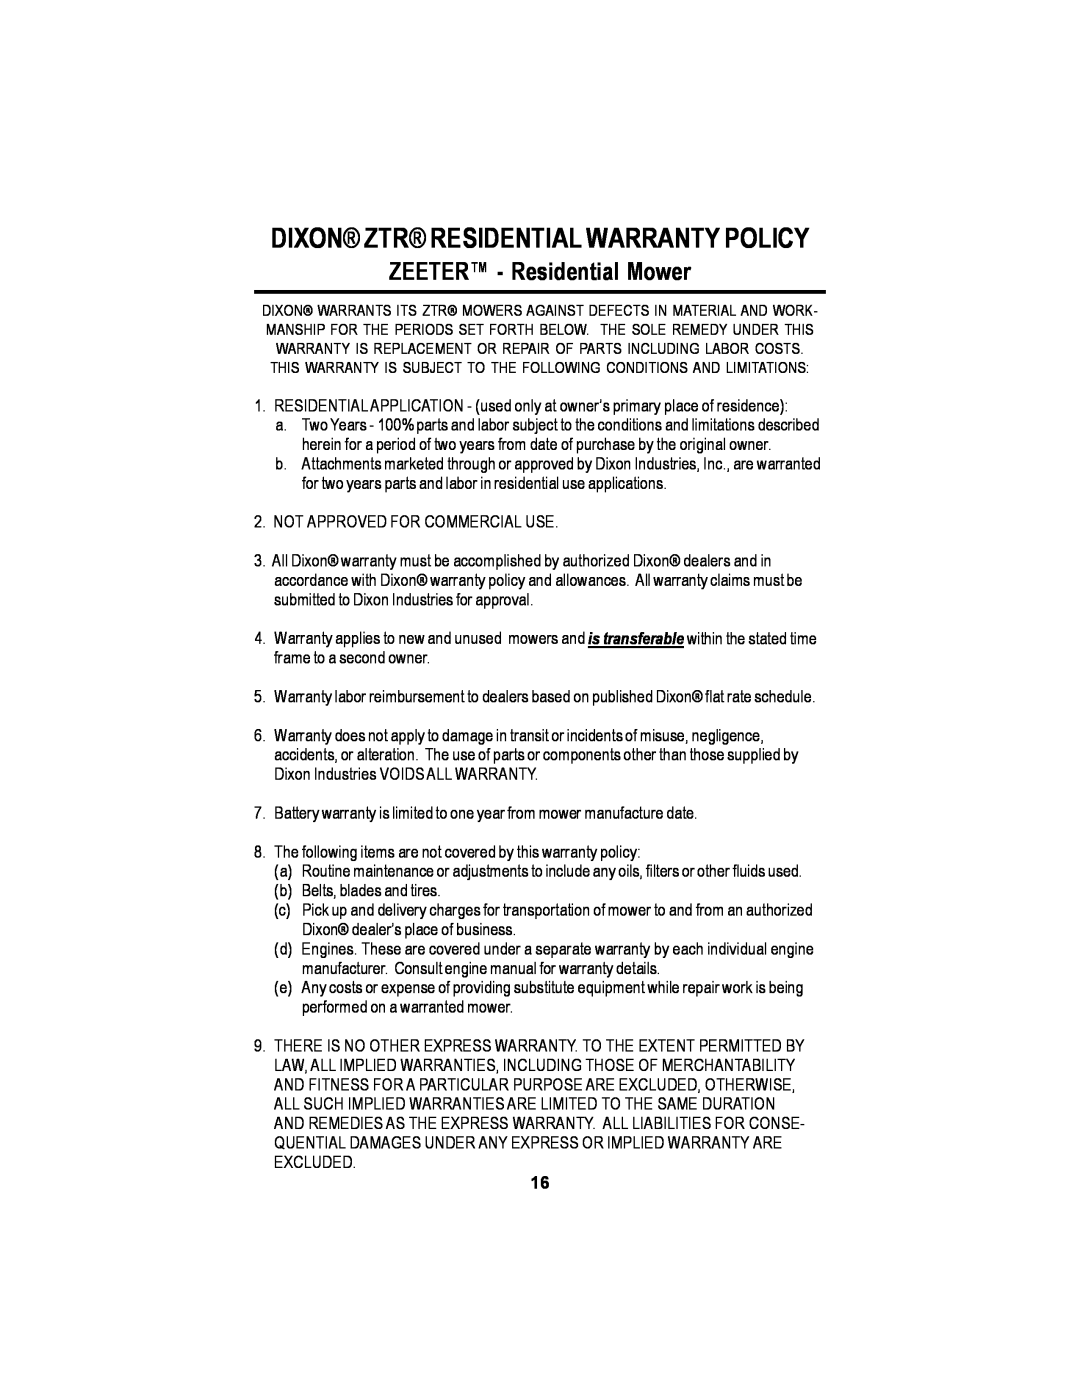 Dixon 14295-1005 manual ZEETER - Residential Mower, Dixon Ztr Residential Warranty Policy 